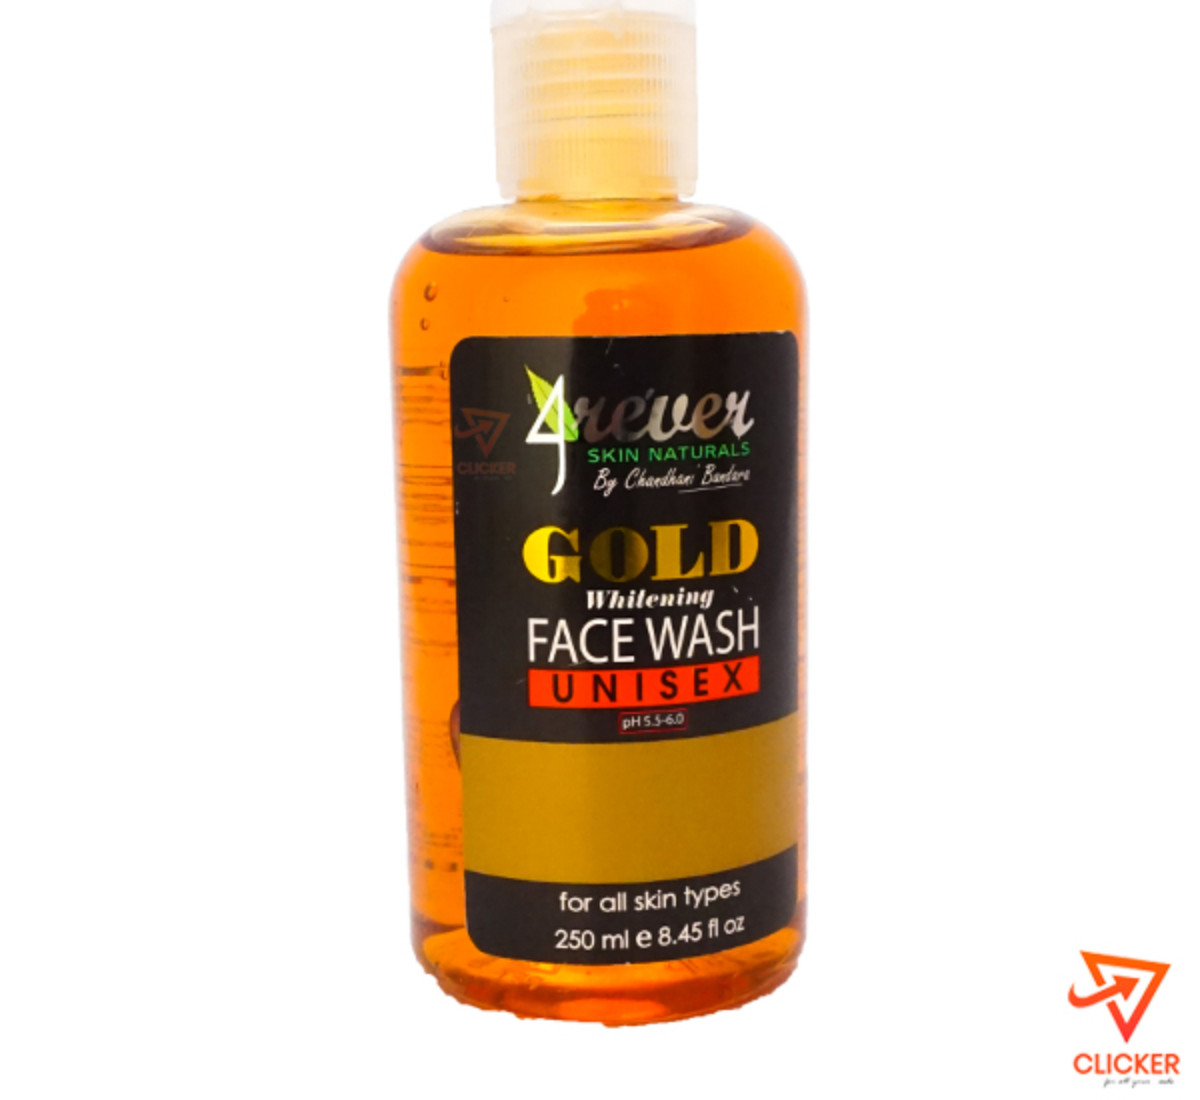 Clicker product 250ml 4REVER Gold whitening facewash Unisex 999